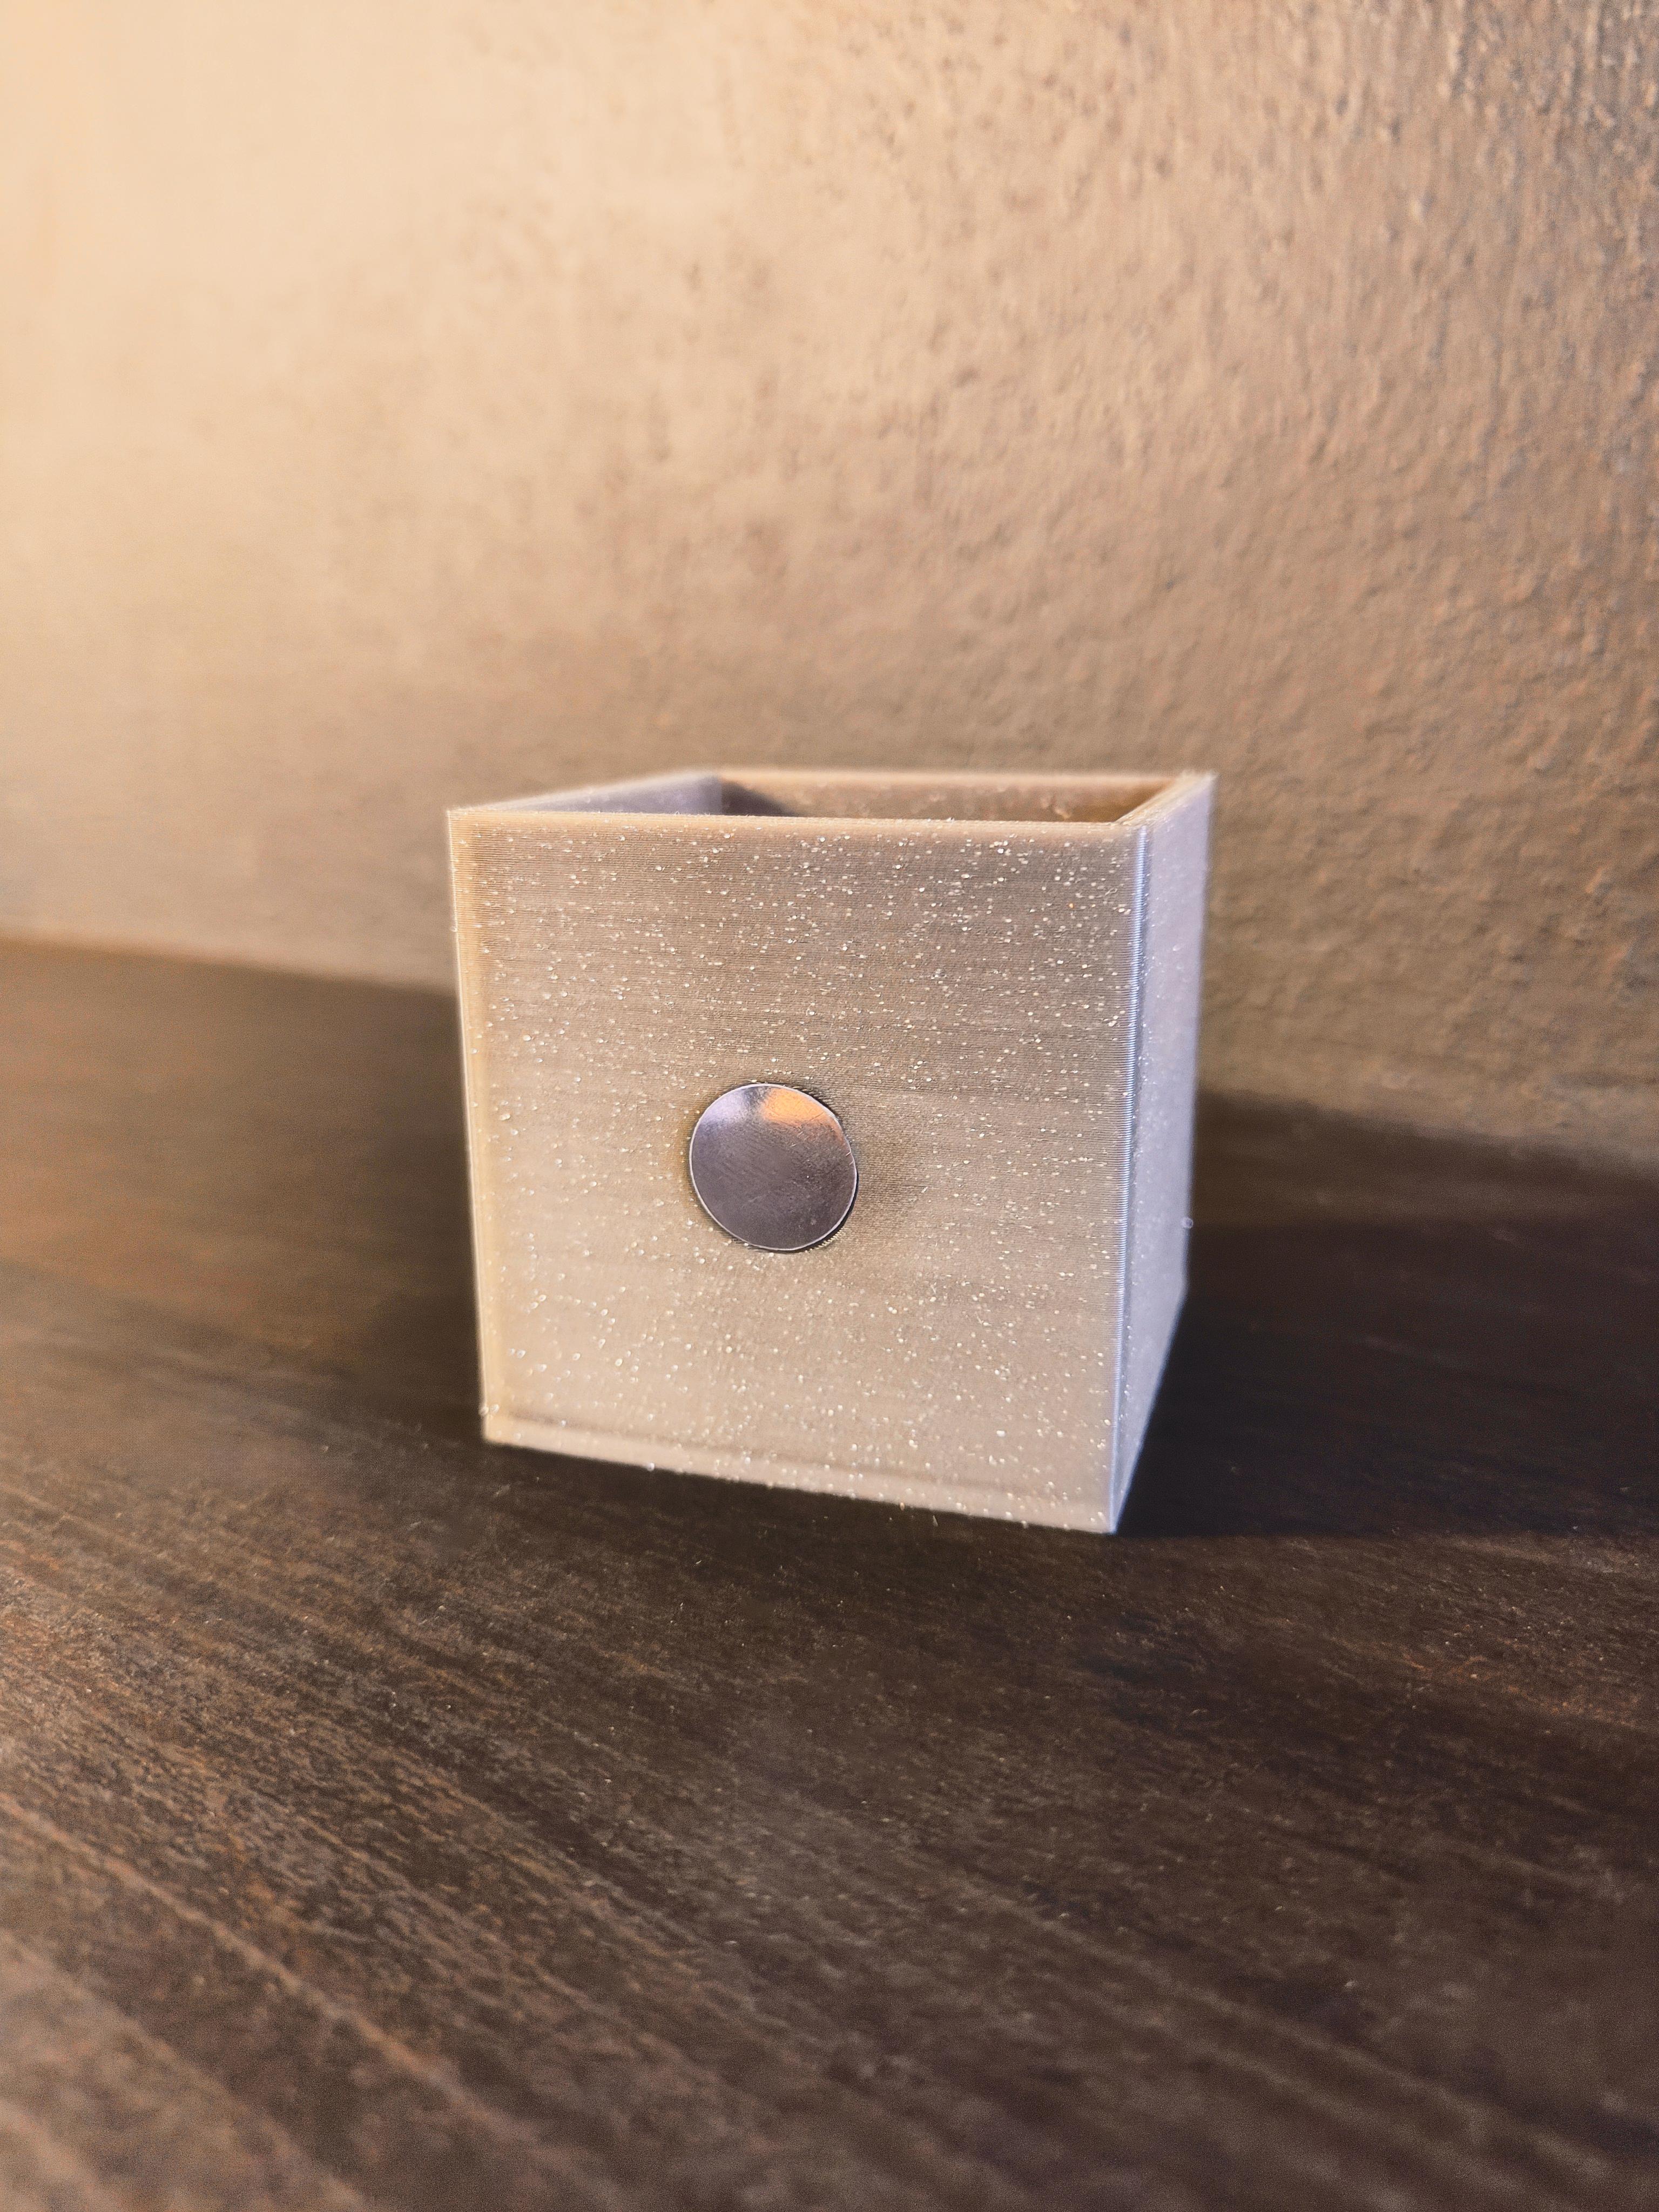 Chameleon Mini - Vase with magnetic skins 3d model